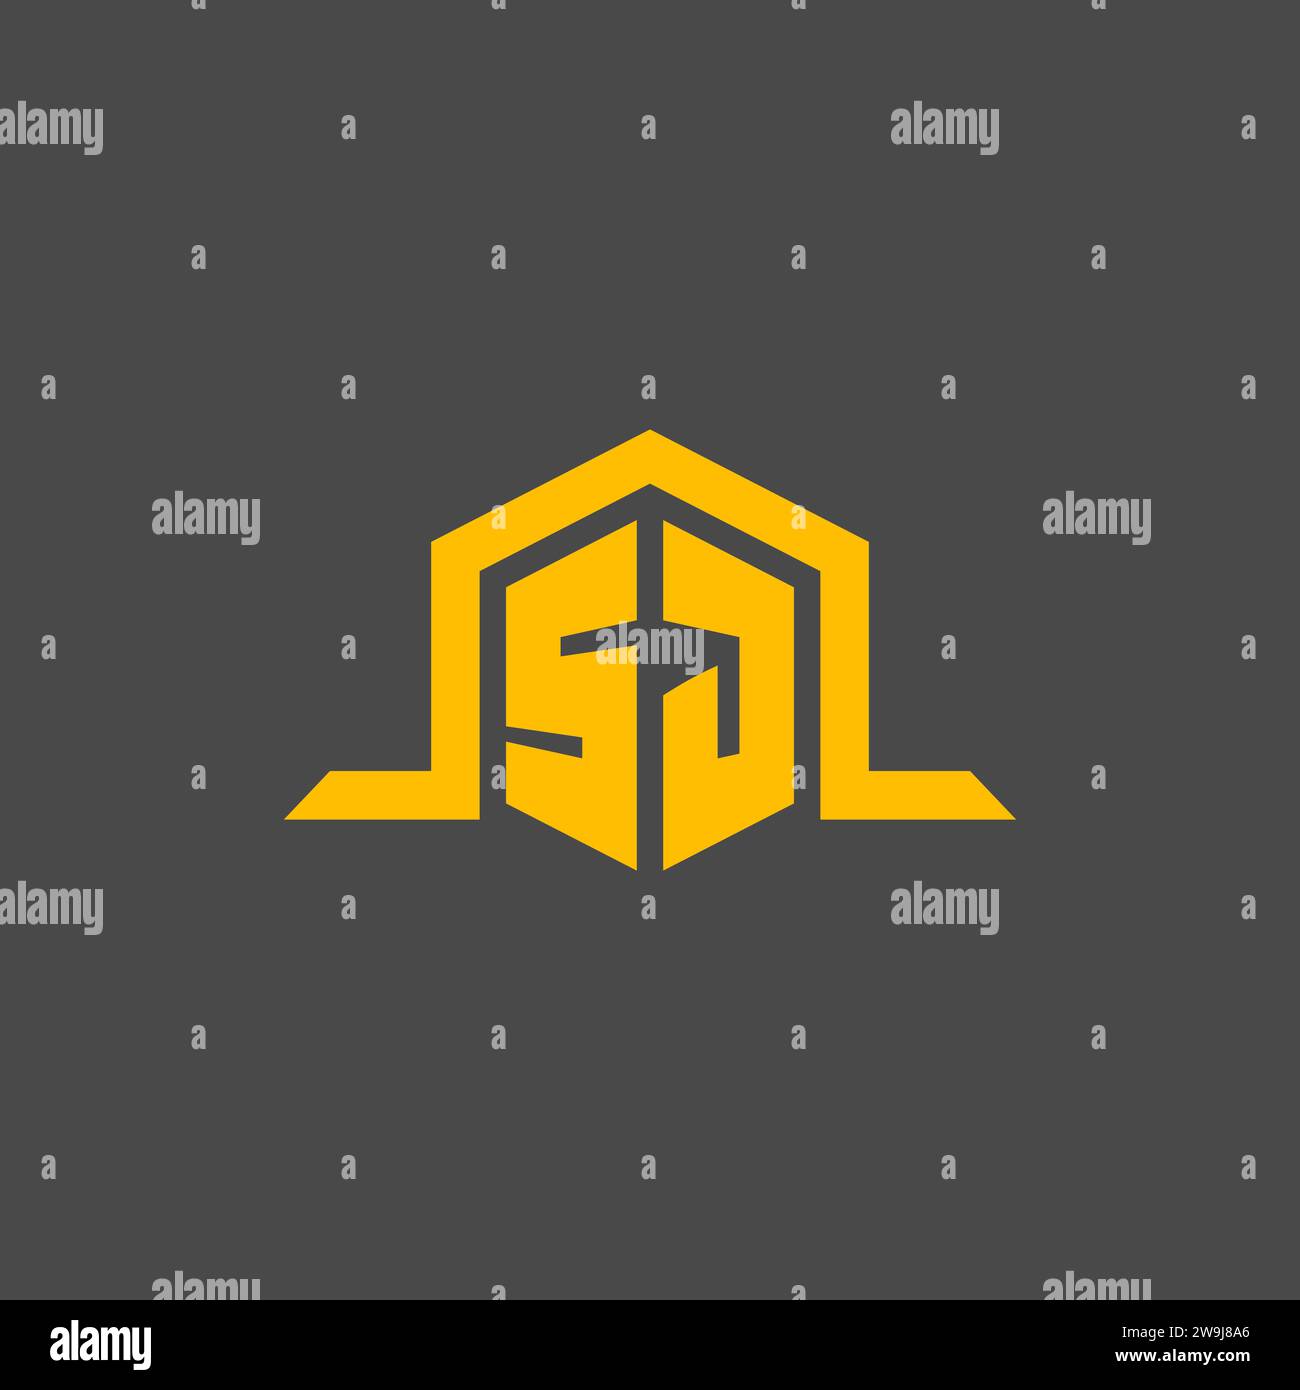 SJ monogram initial logo with hexagon style design ideas Stock Vector